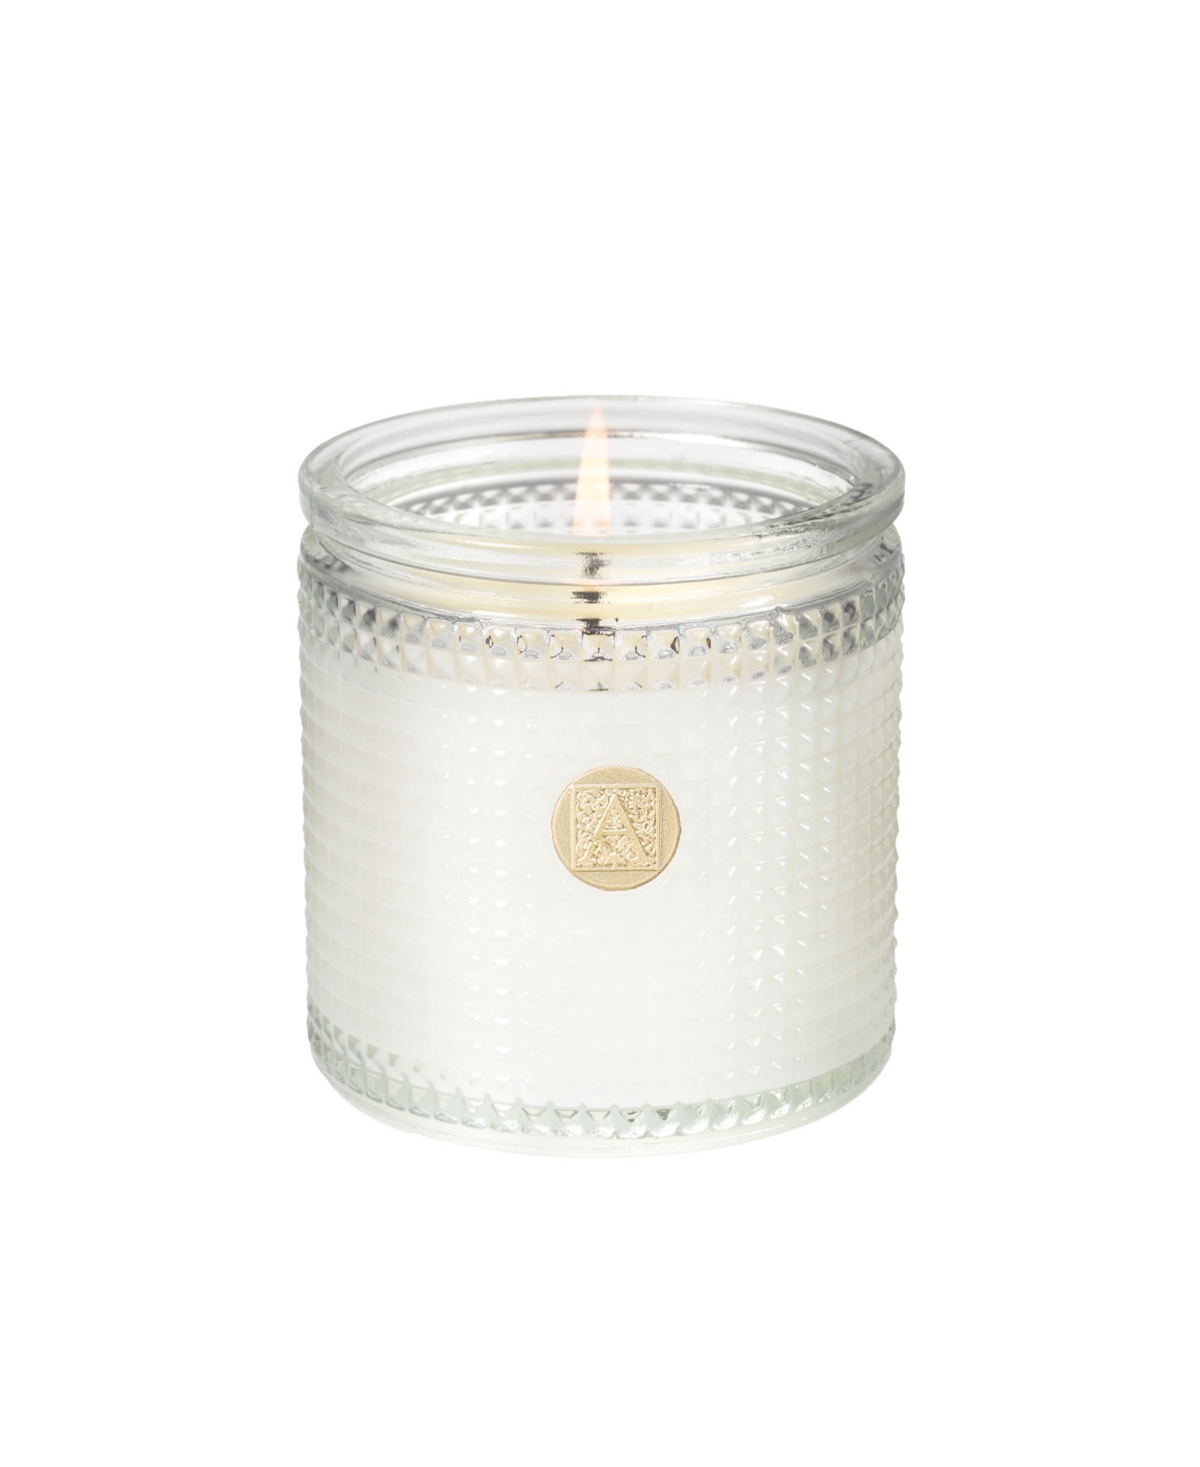 Elegant Essentials Royal Linen Textured Glass Candle, 6 oz - White